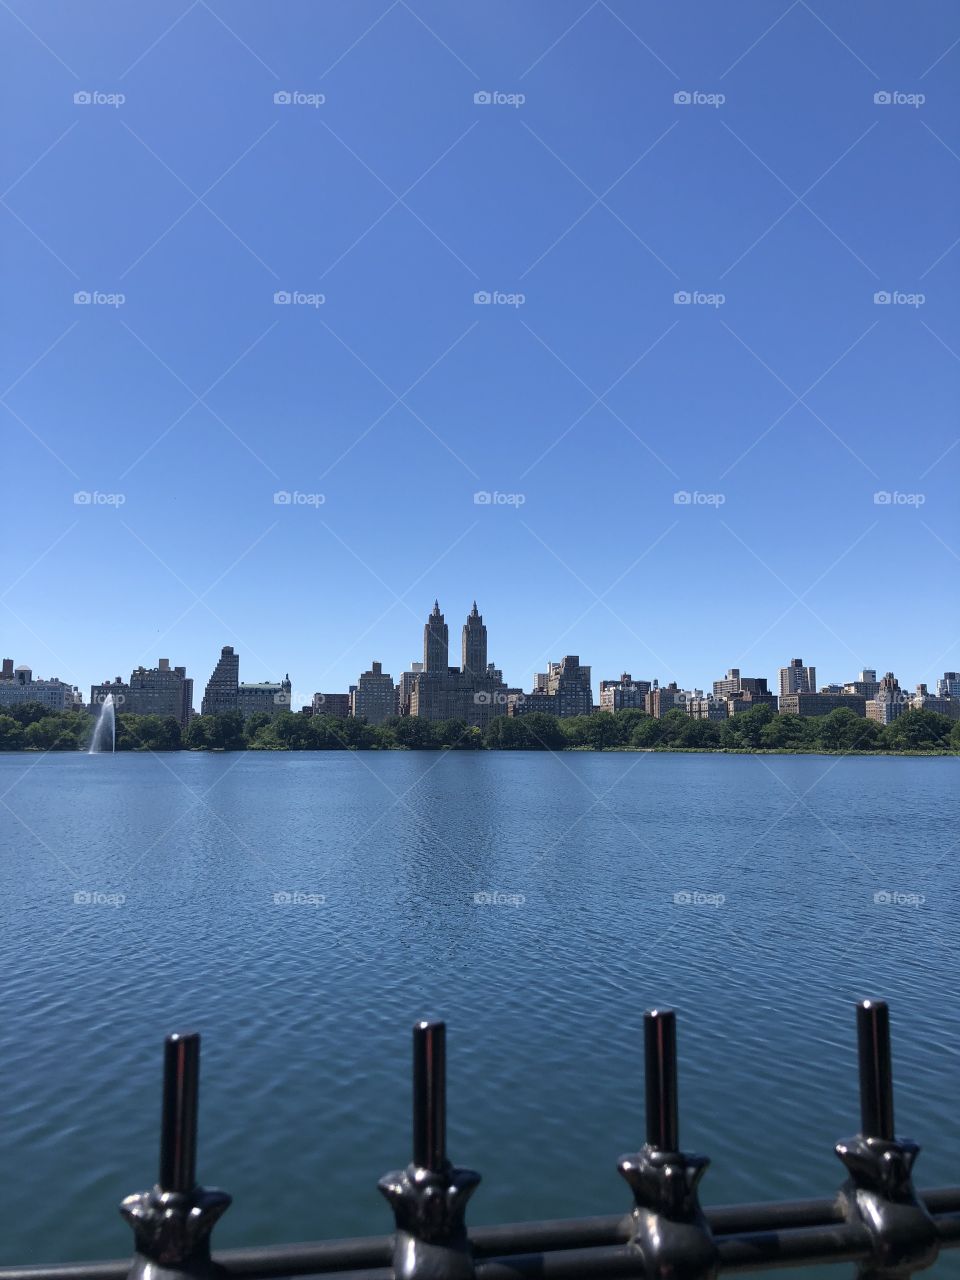 Central Park Skyline across the lake